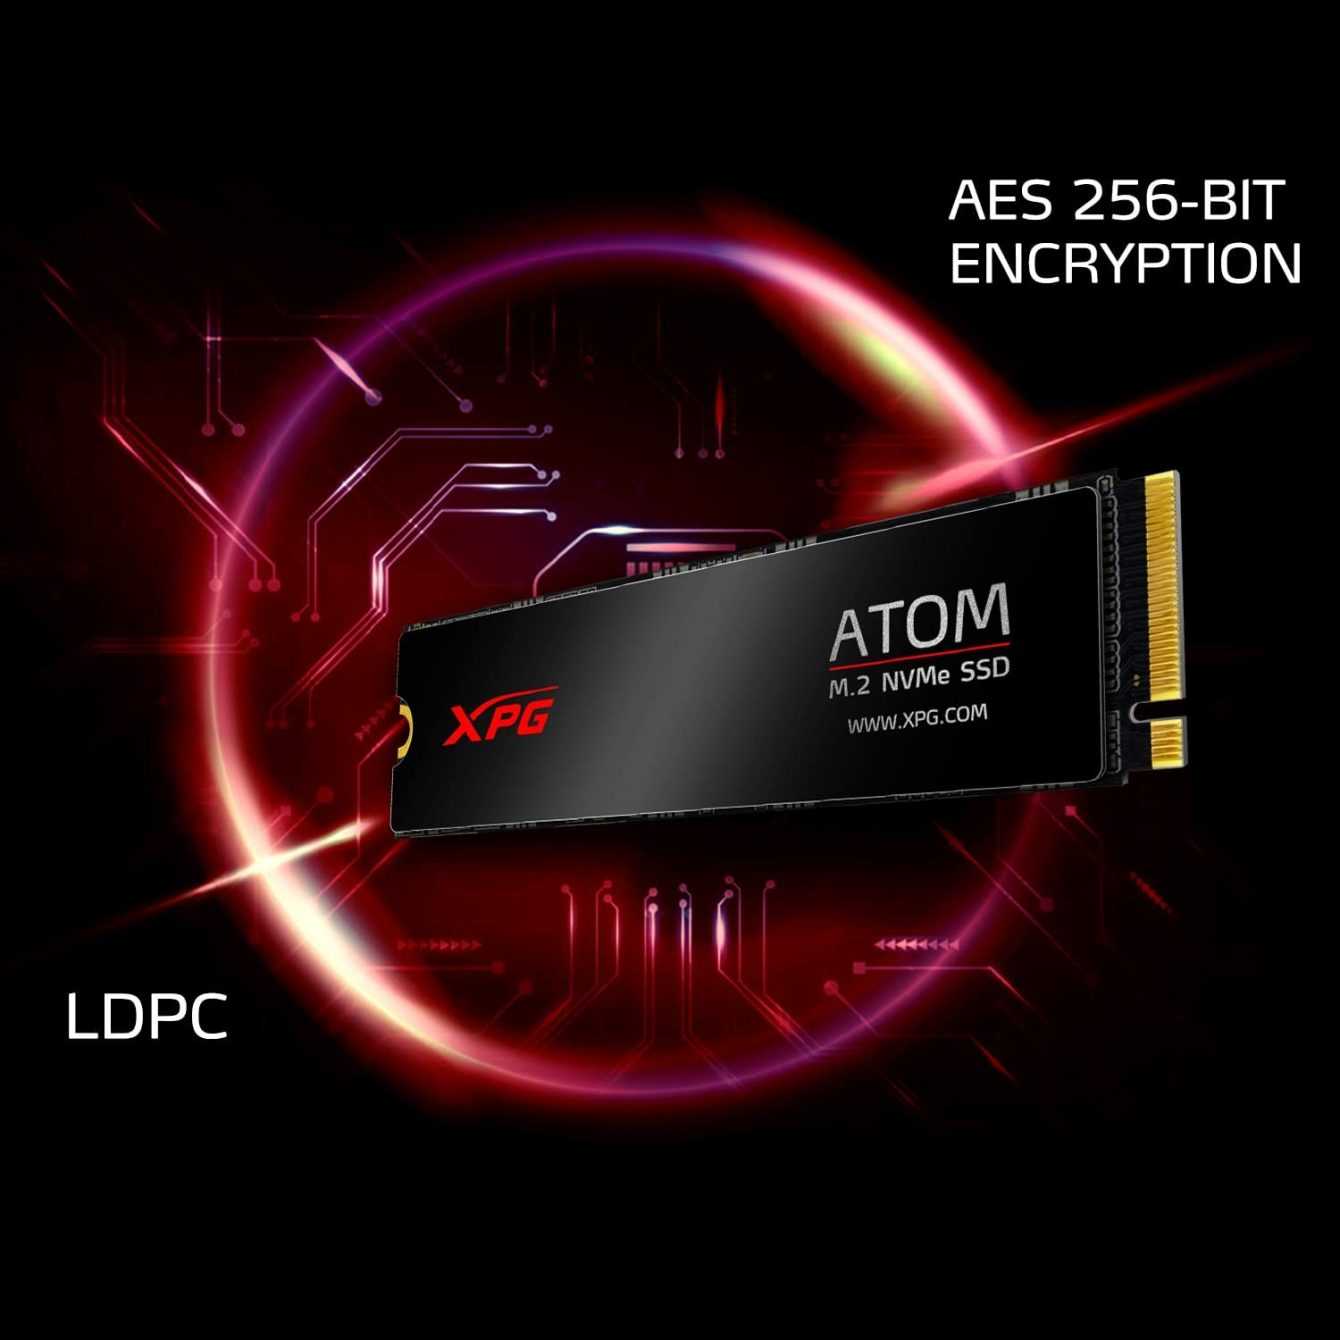 XPG: Introduces the M.2 2280 ATOM 50 Series PCIe SSDs